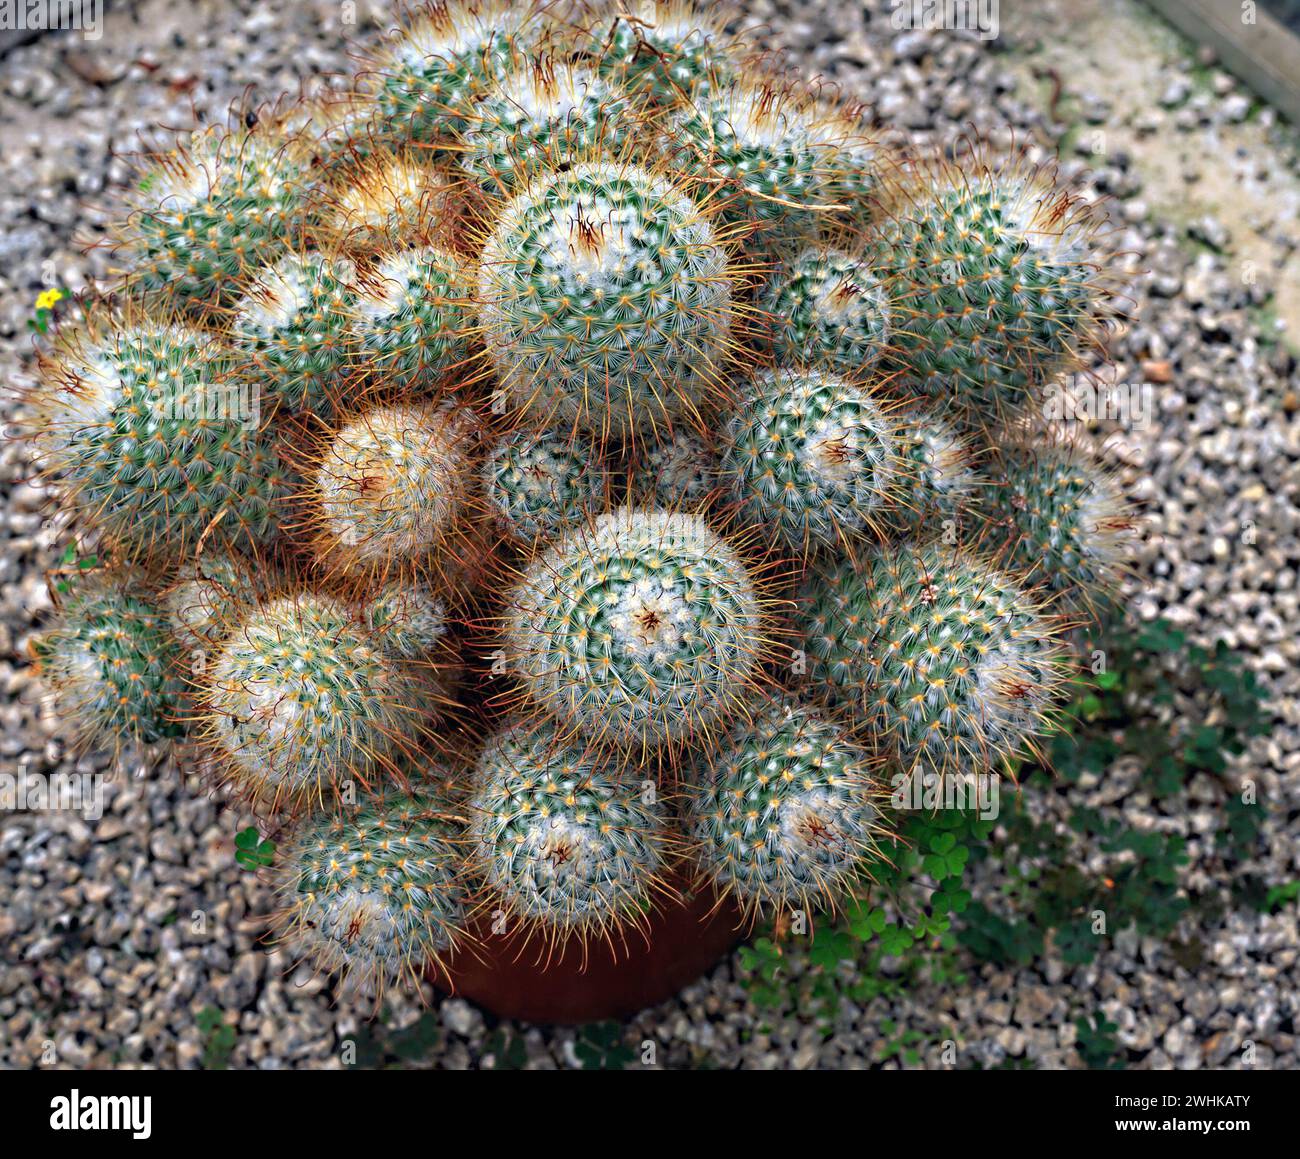 Closeup of Mammilaria Bombycina silken pincushion cactus growing in pot standing on fine gravel / grit bed, England, UK Stock Photo